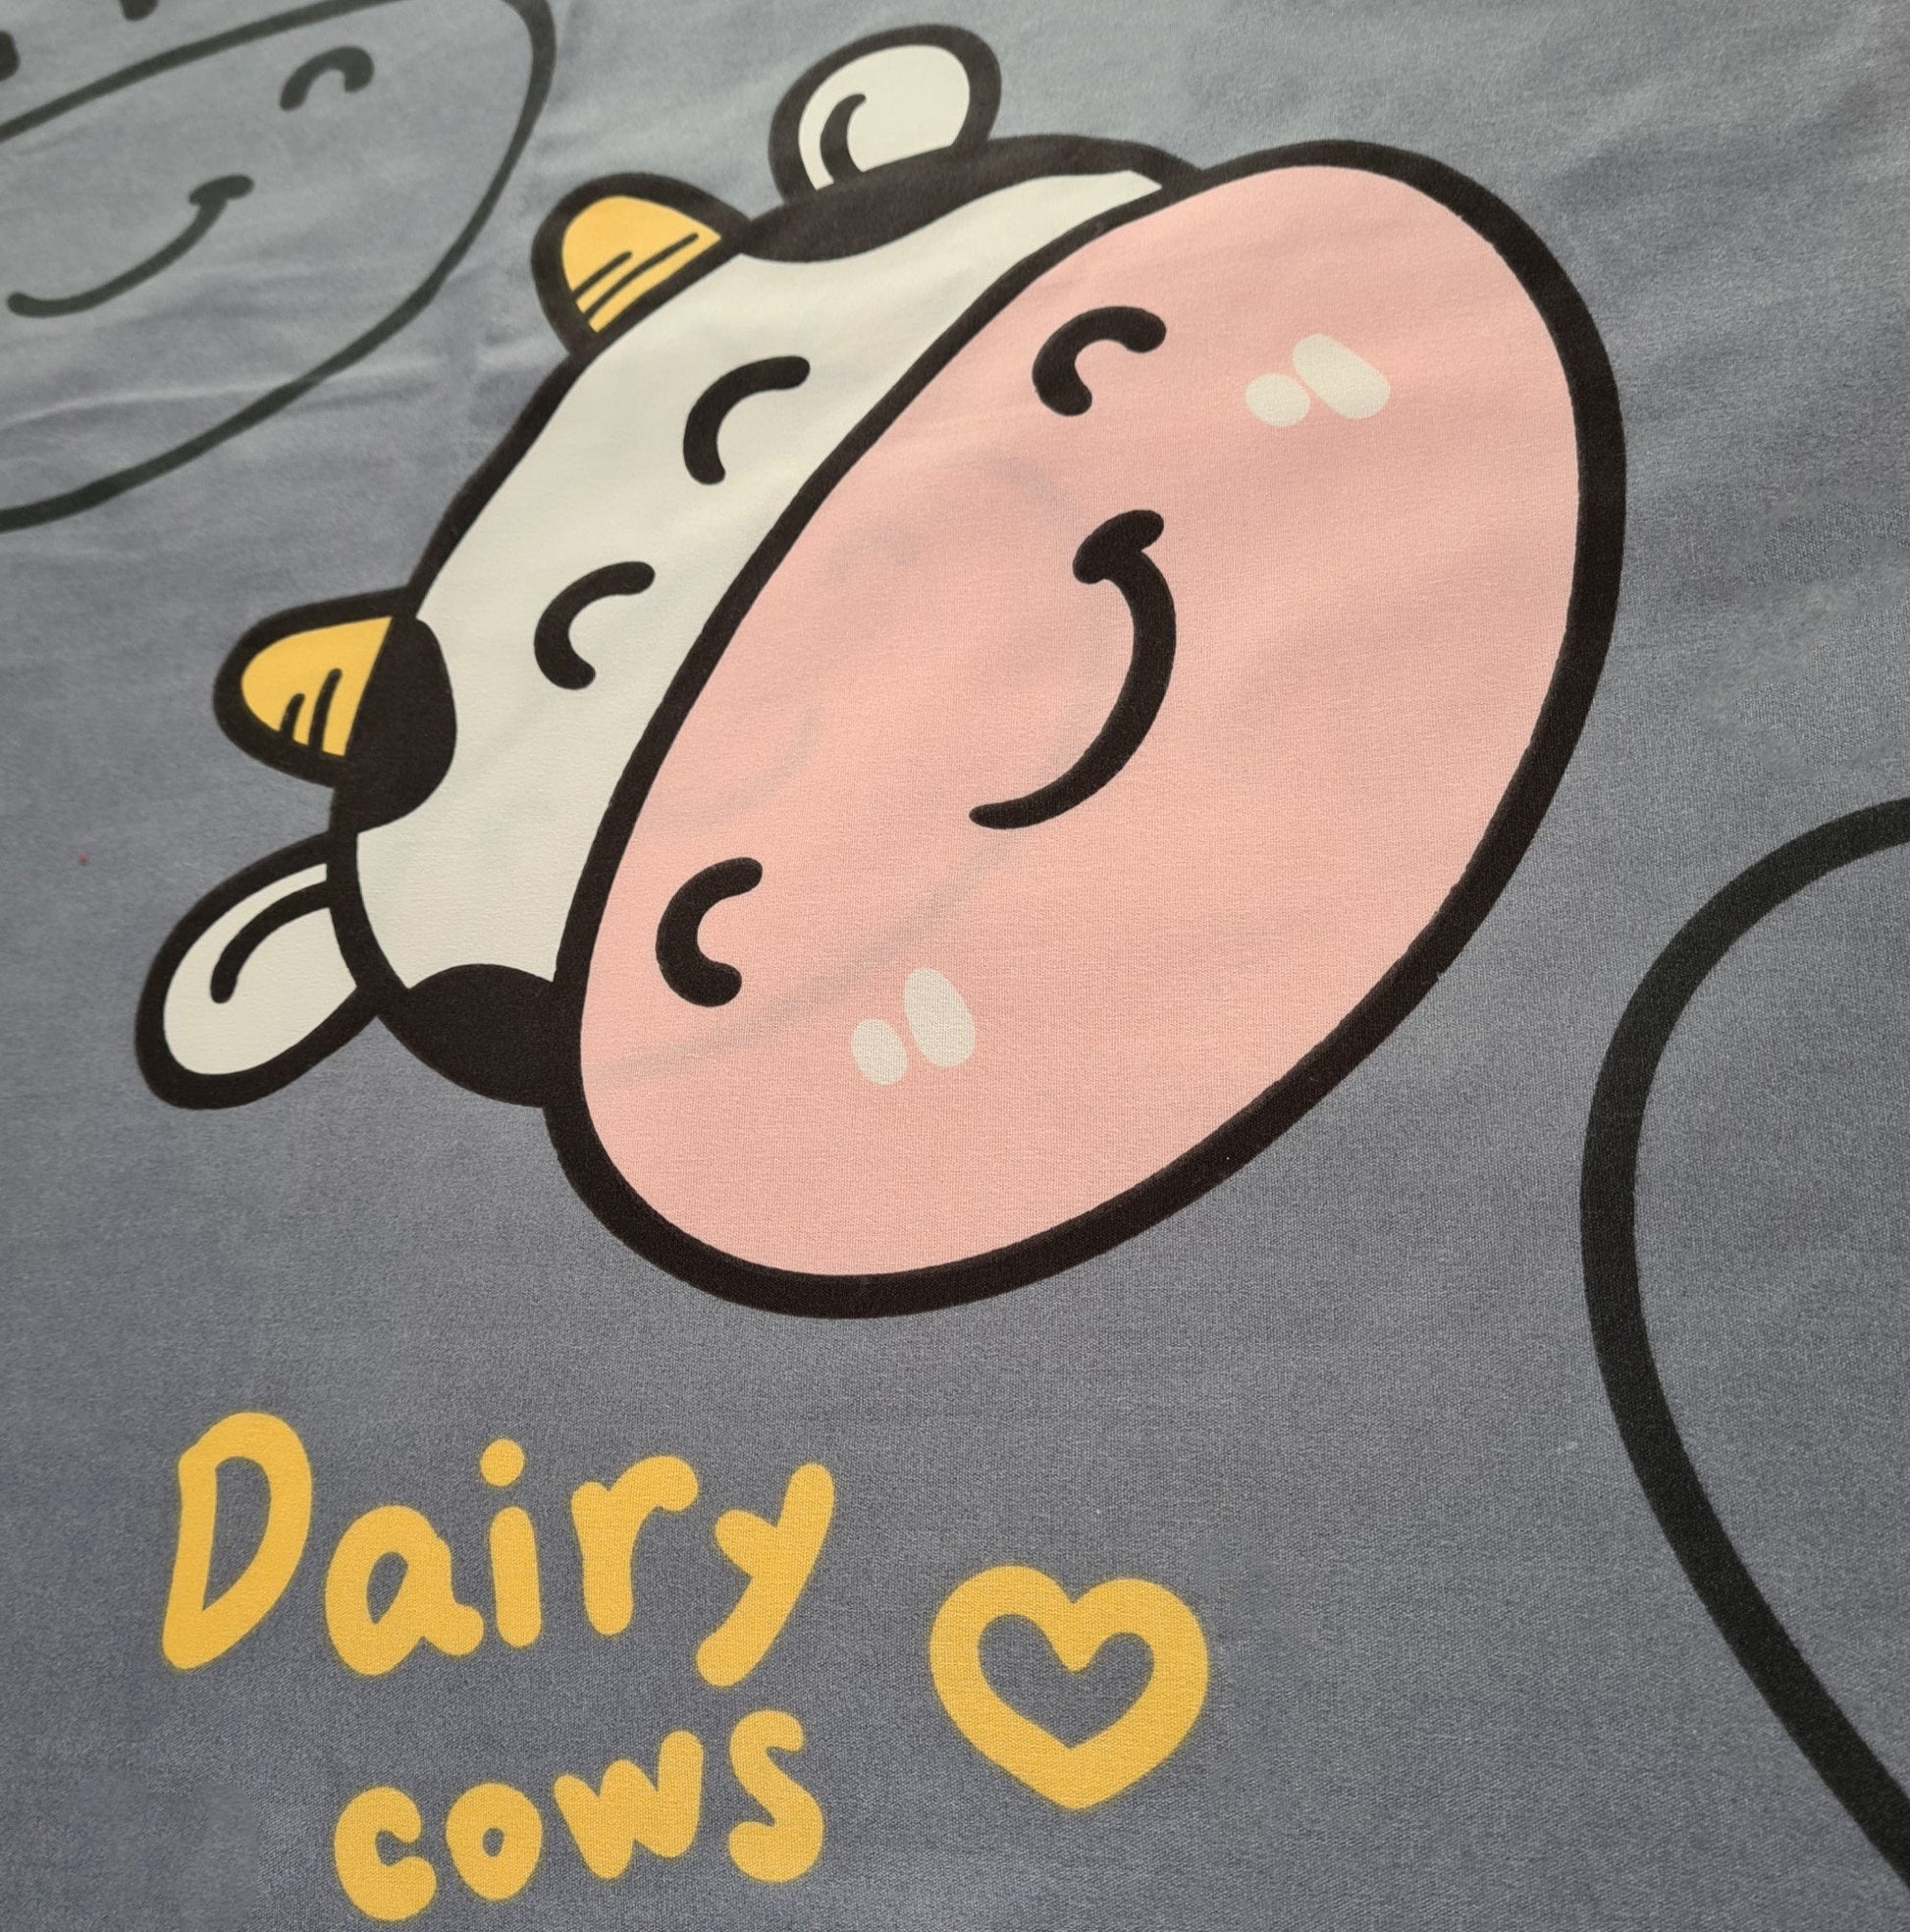 Adorable Happy Cow Bedding Set